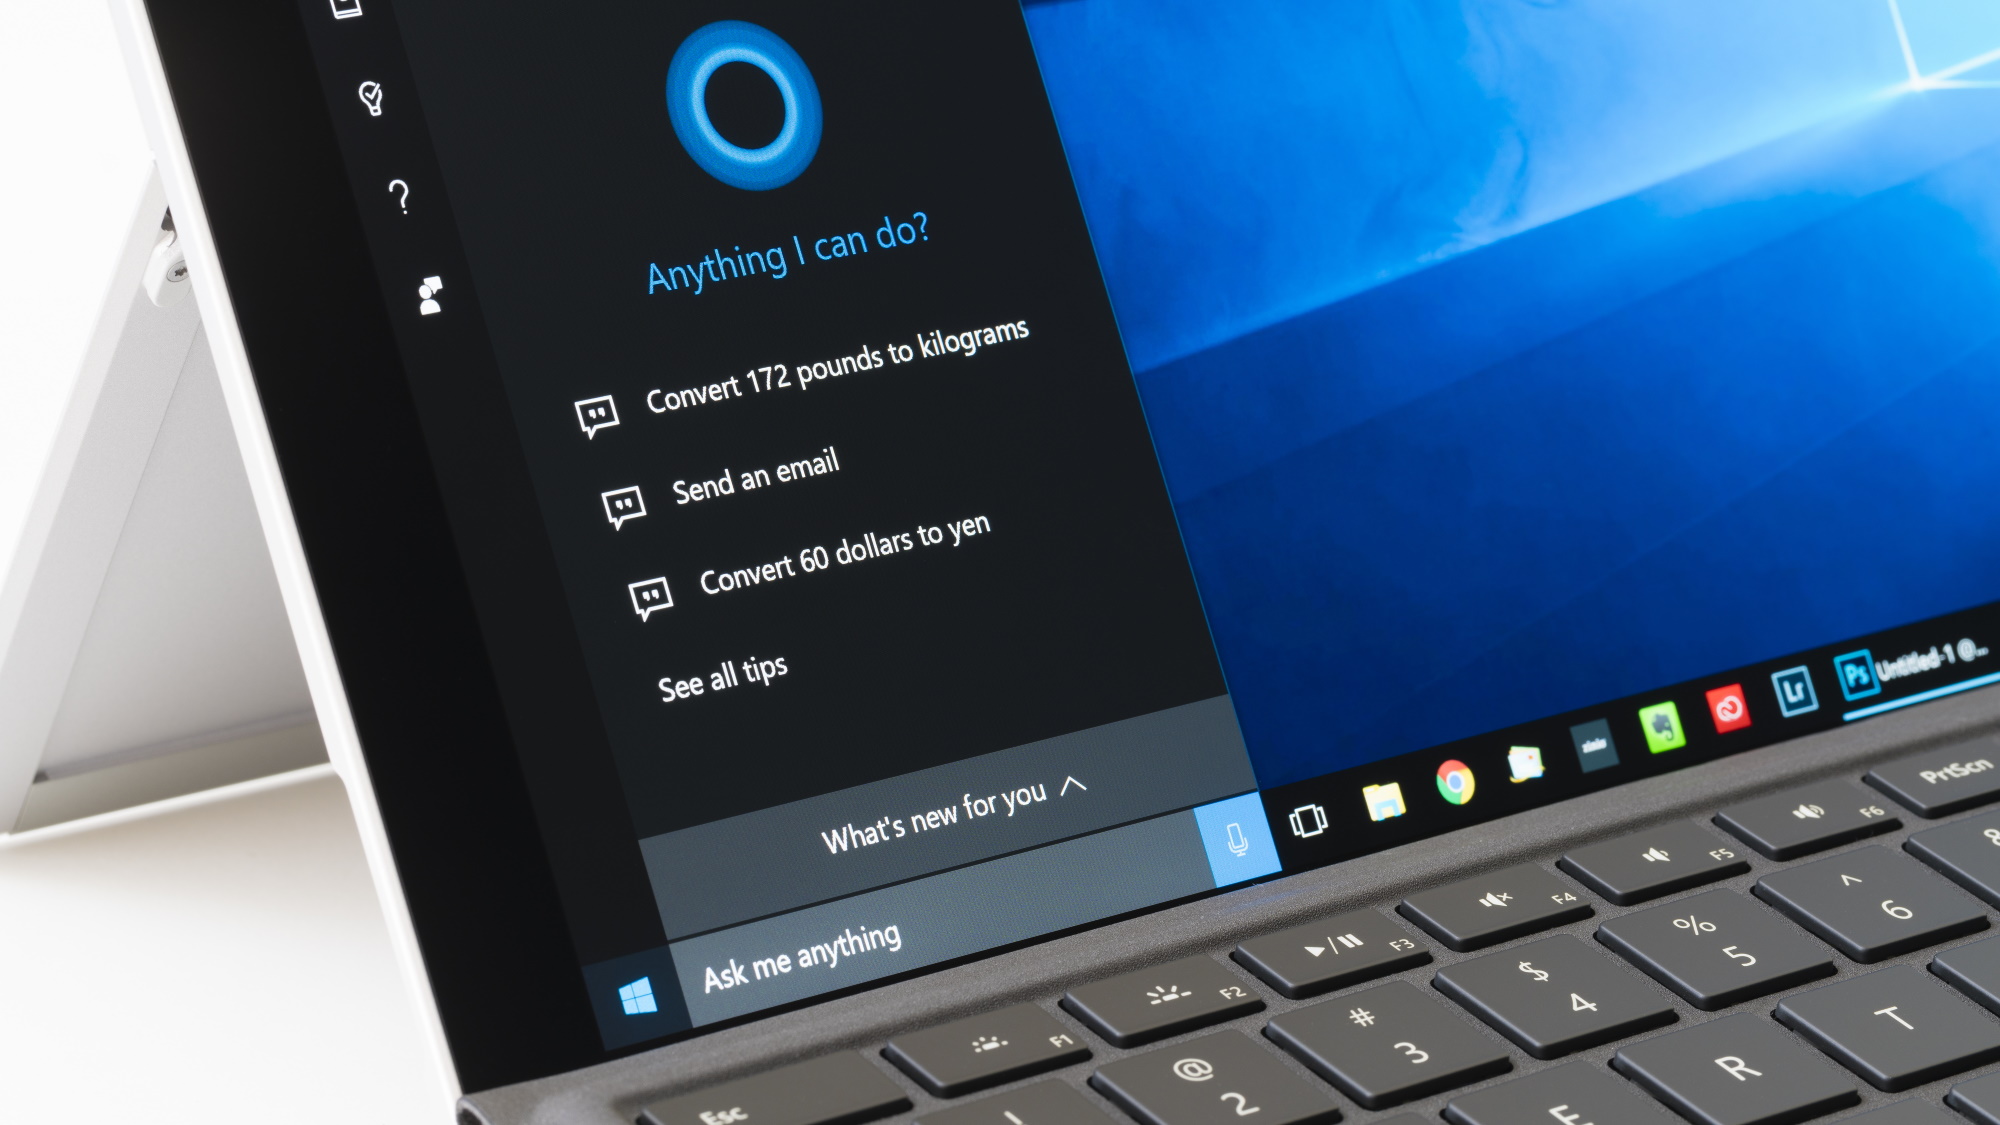 Cortana in Windows 10